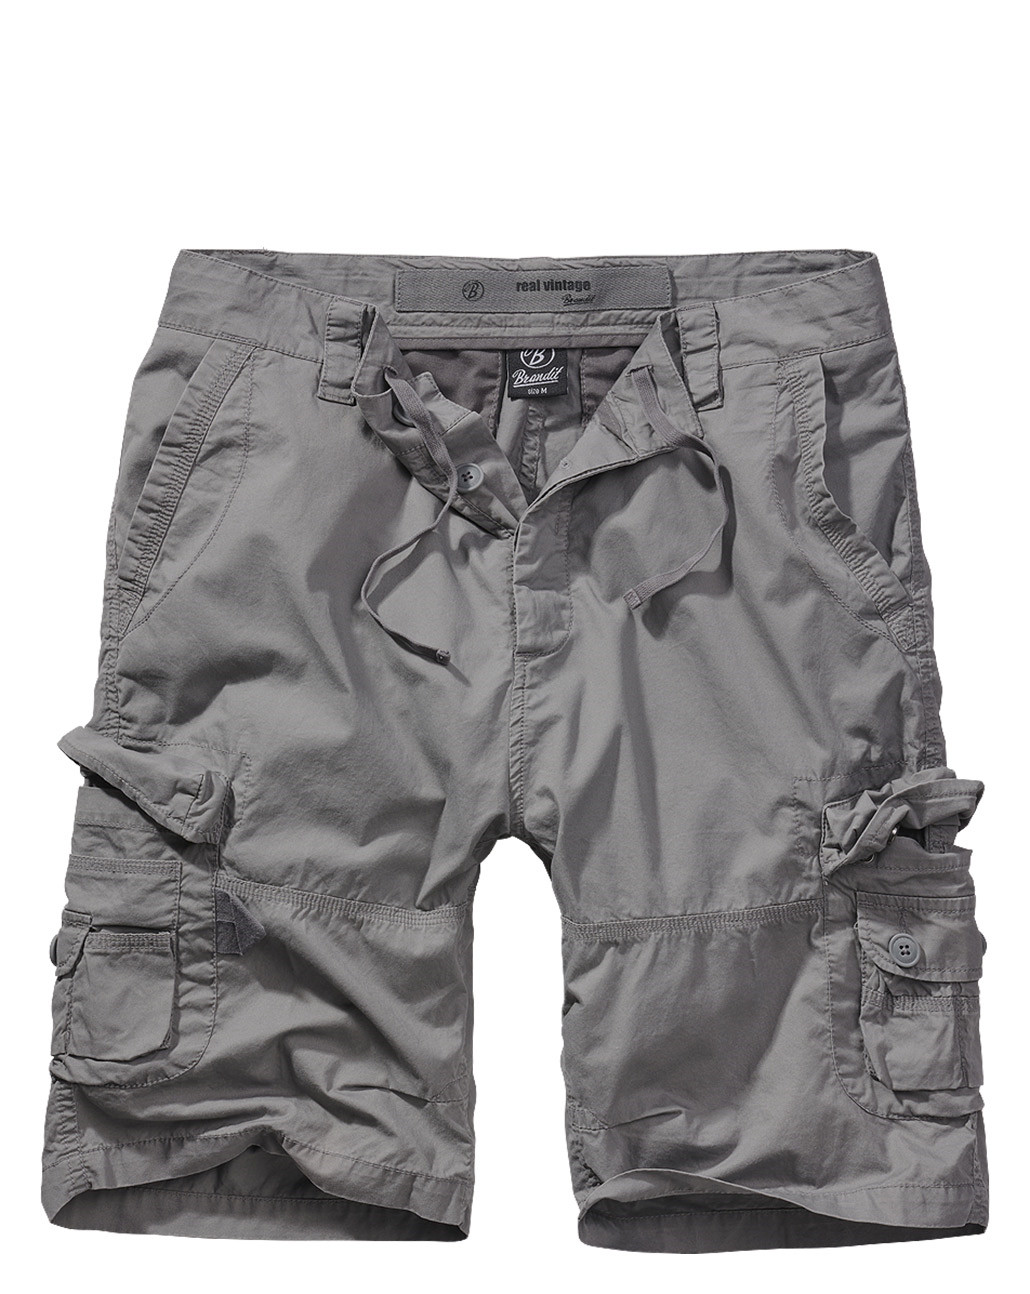 Brandit Ty Shorts (Charcoal, S)